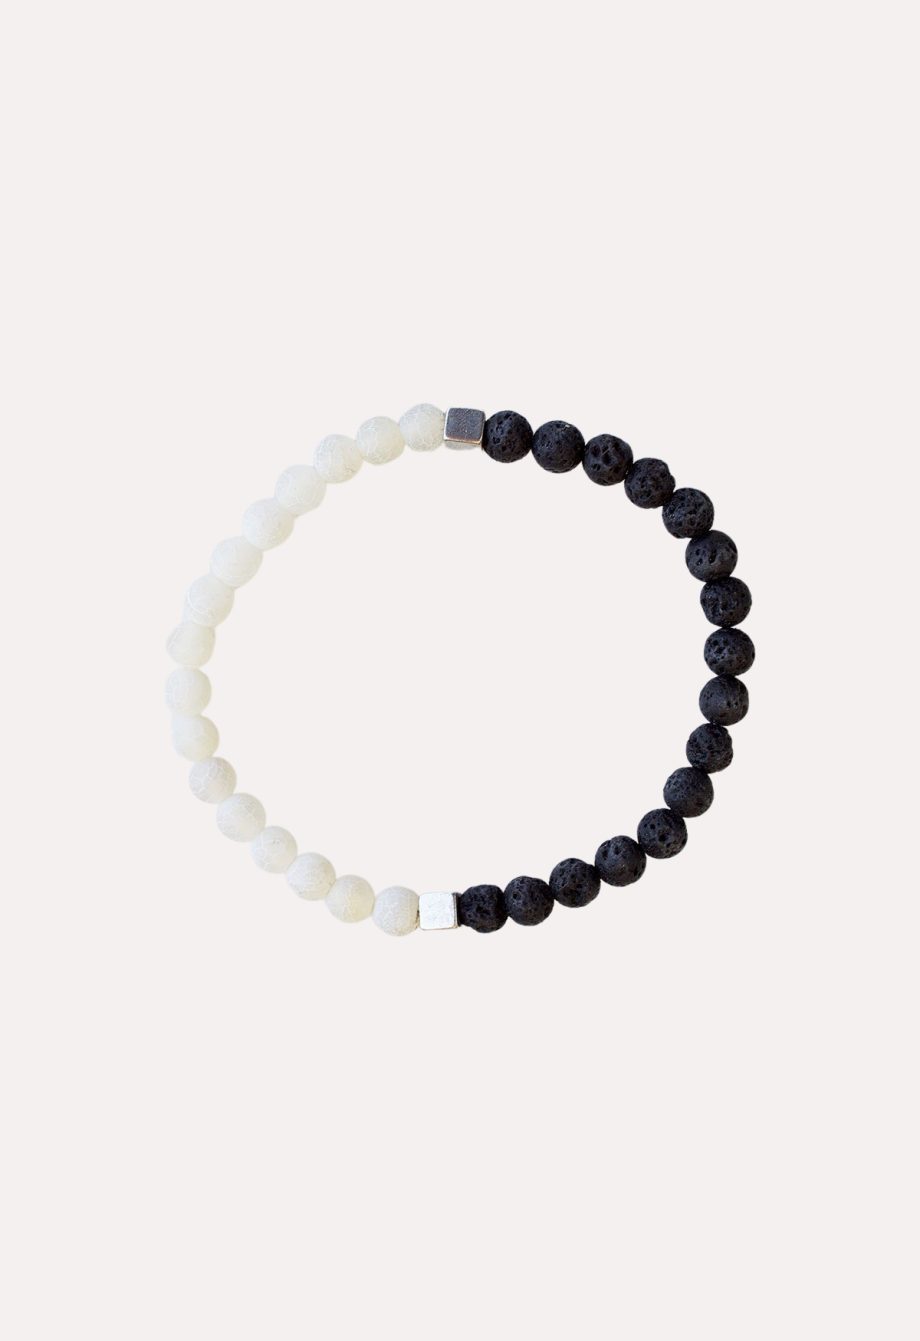 Half black half white beads bracelet